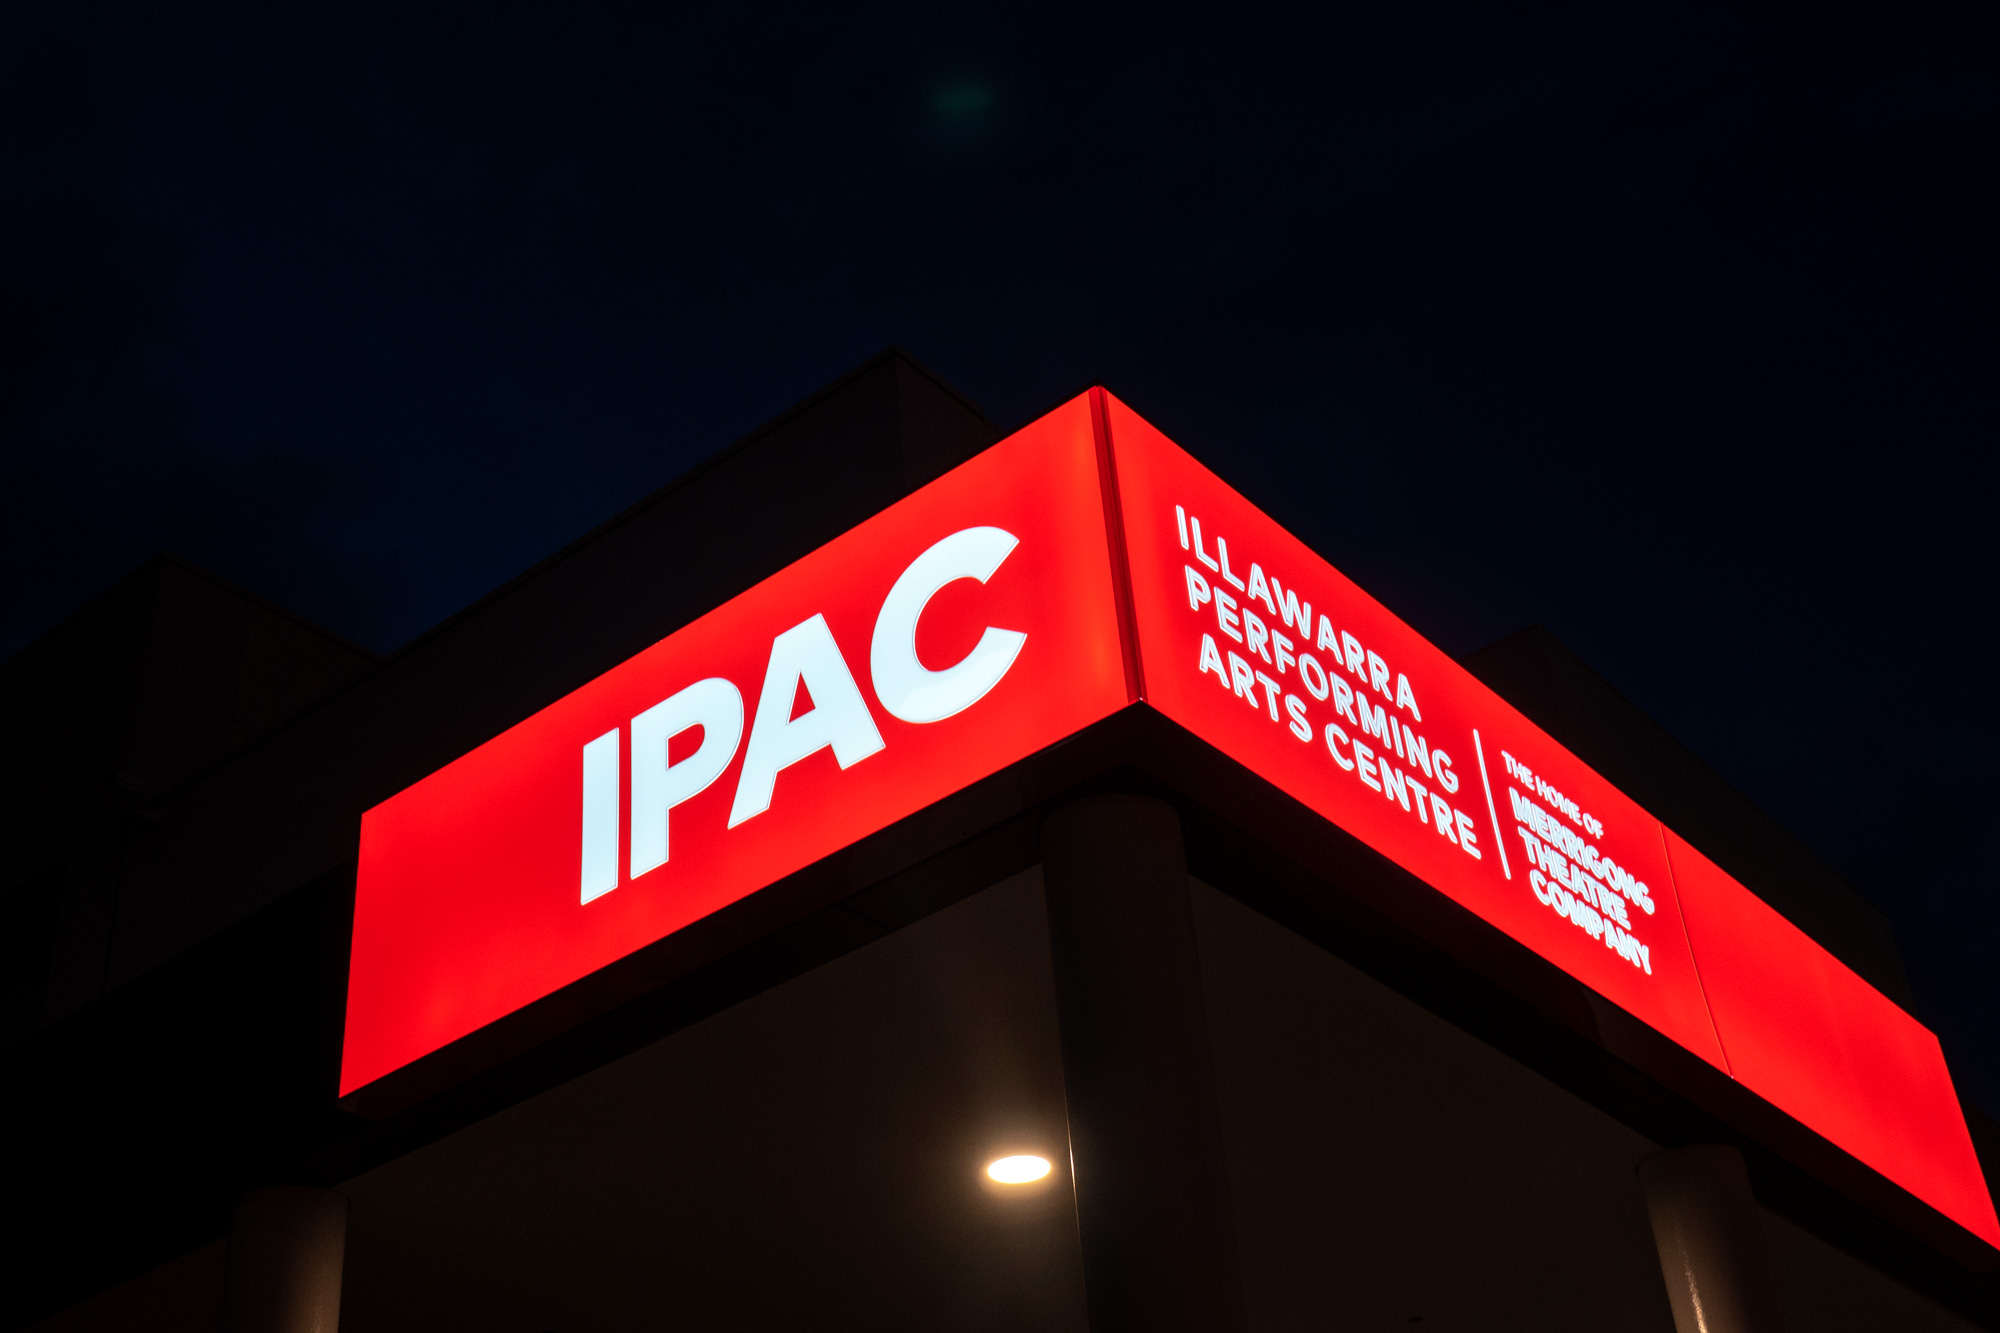 Illawarra Performing Arts Centre (IPAC) - Illuminated Awning Signage